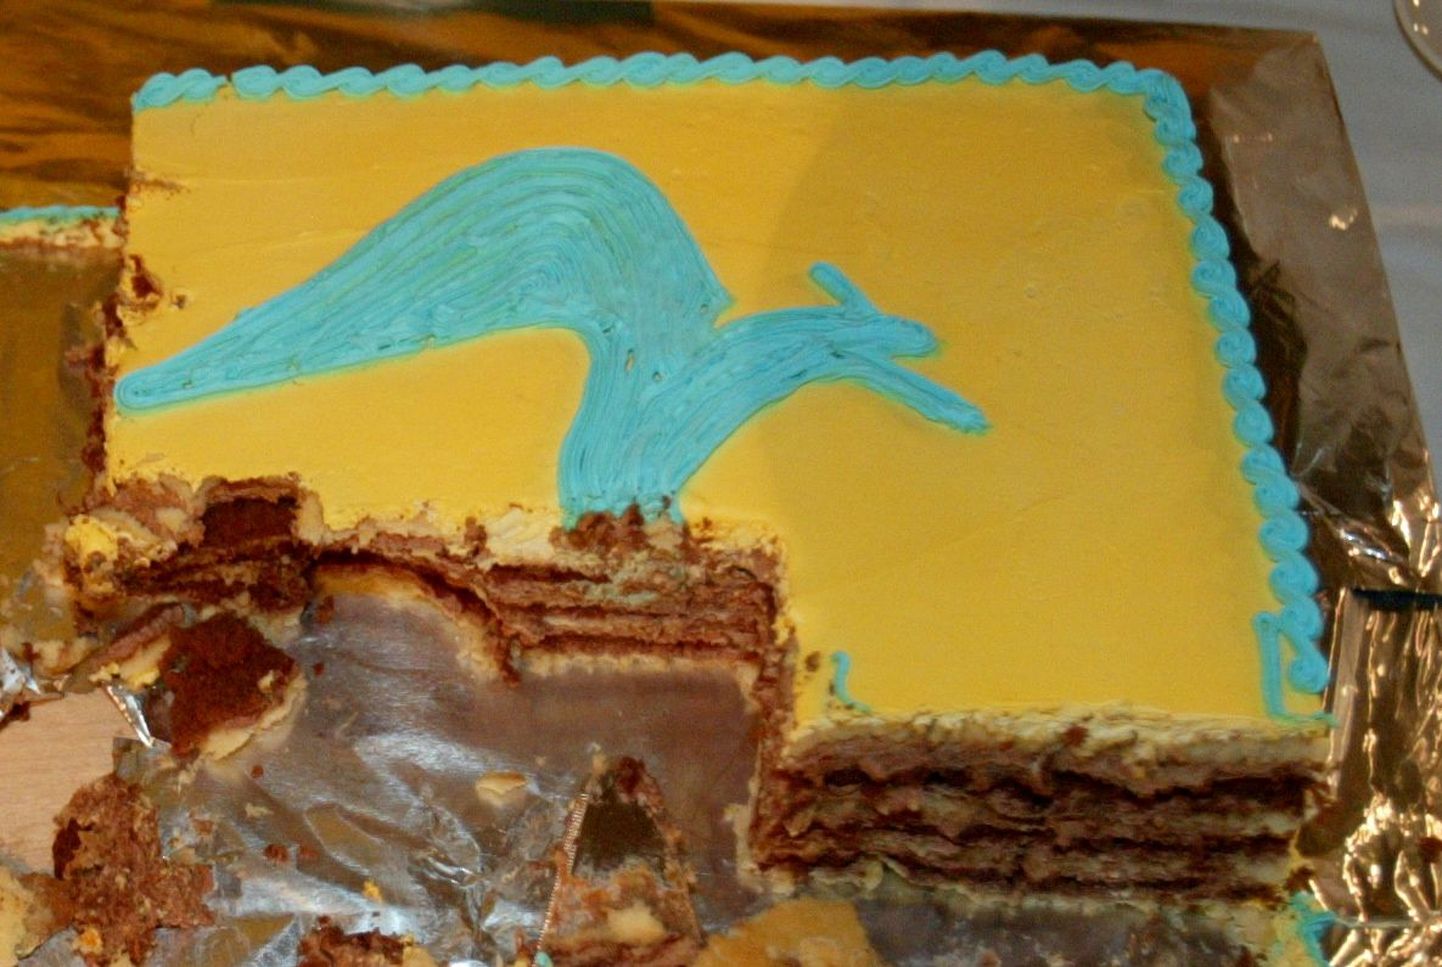 Торт с символикой Партии реформ.